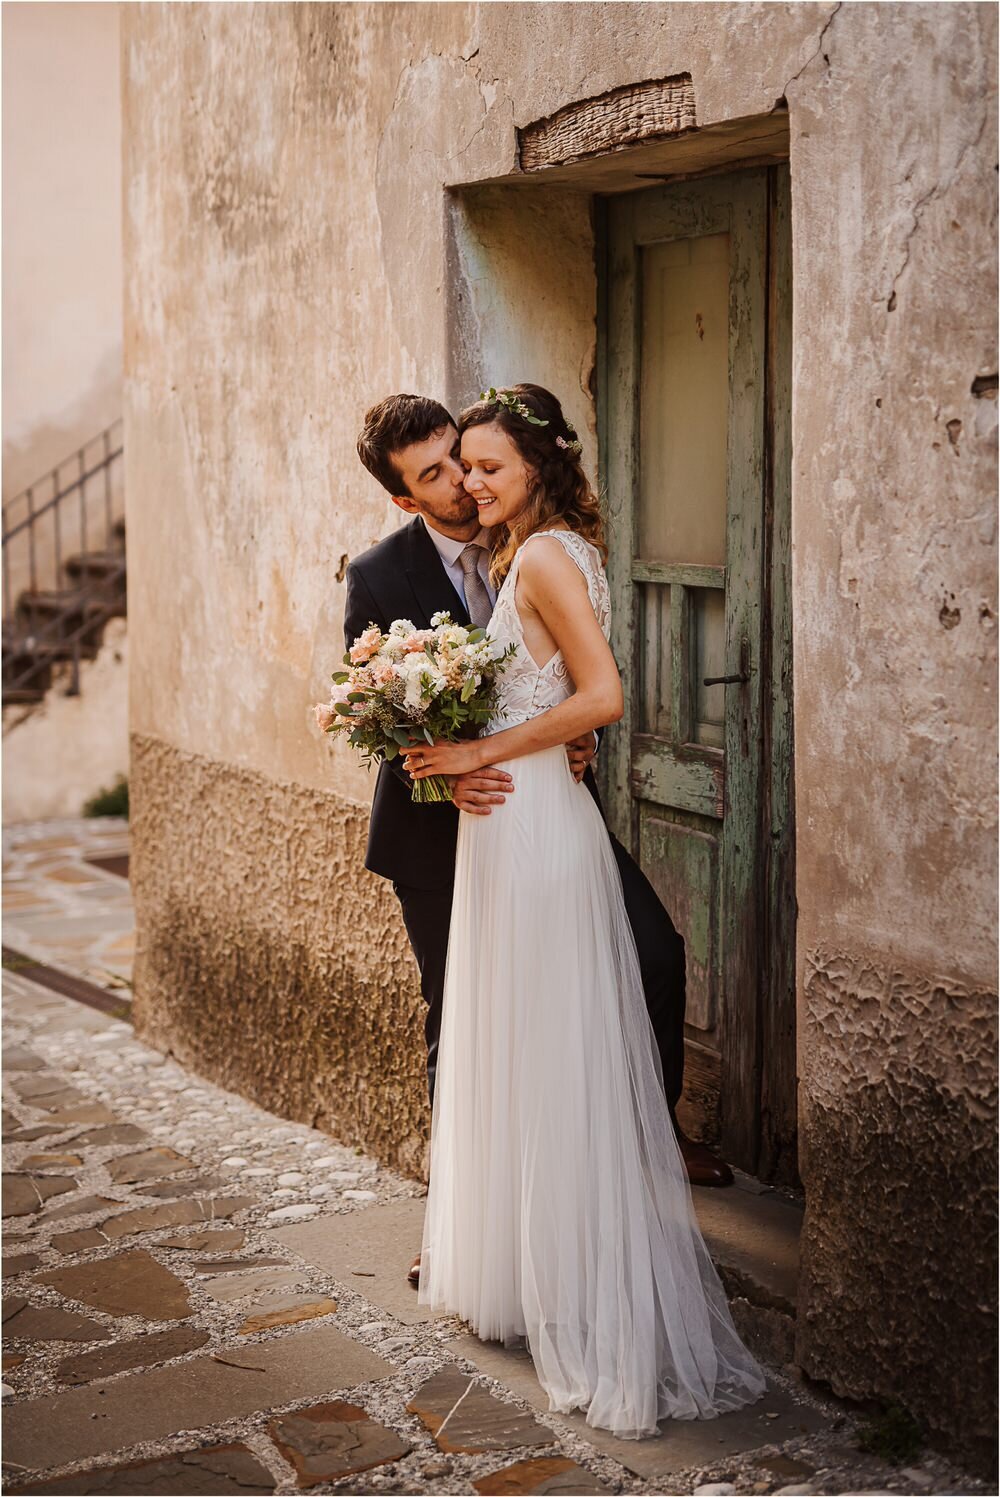 best of wedding photography 2019 photographer italy ireland tuscany santorini greece spain barcelona lake como chateux scotland destination wedding 0197.jpg